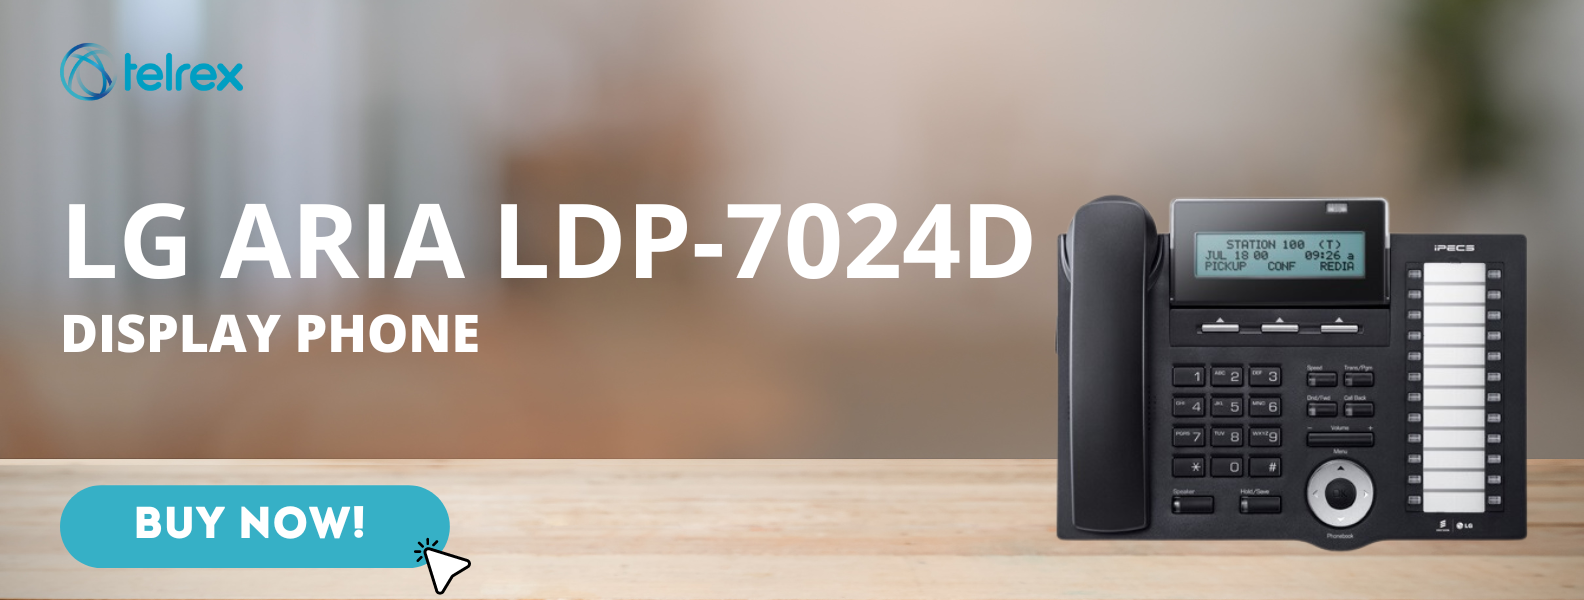 LG Aria LDP-7024D Display Phone